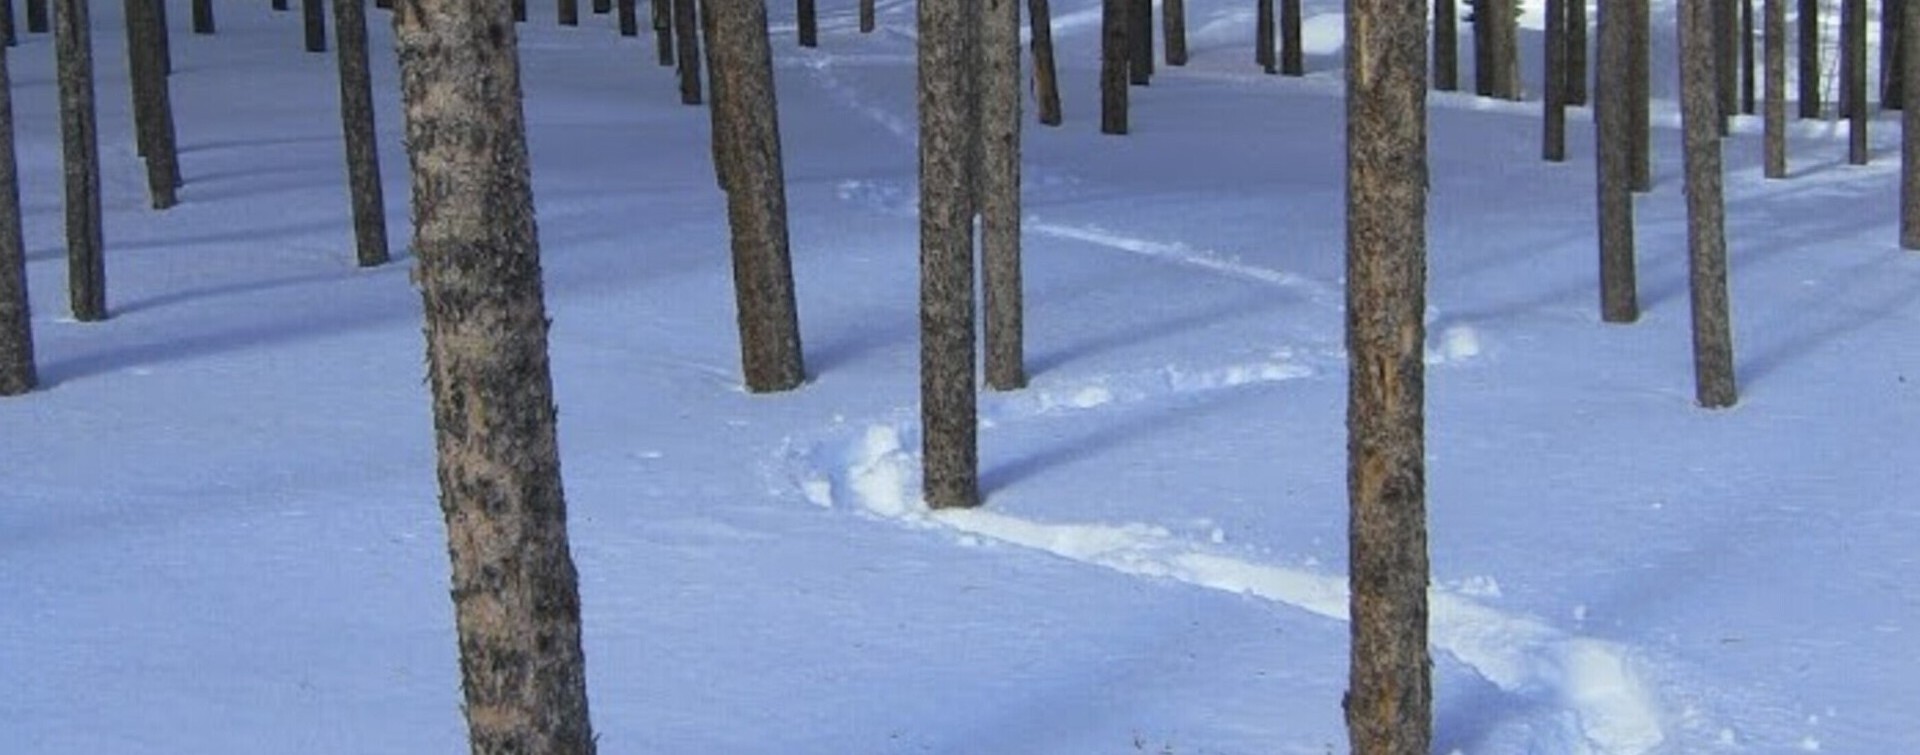 snow tracks through a forest